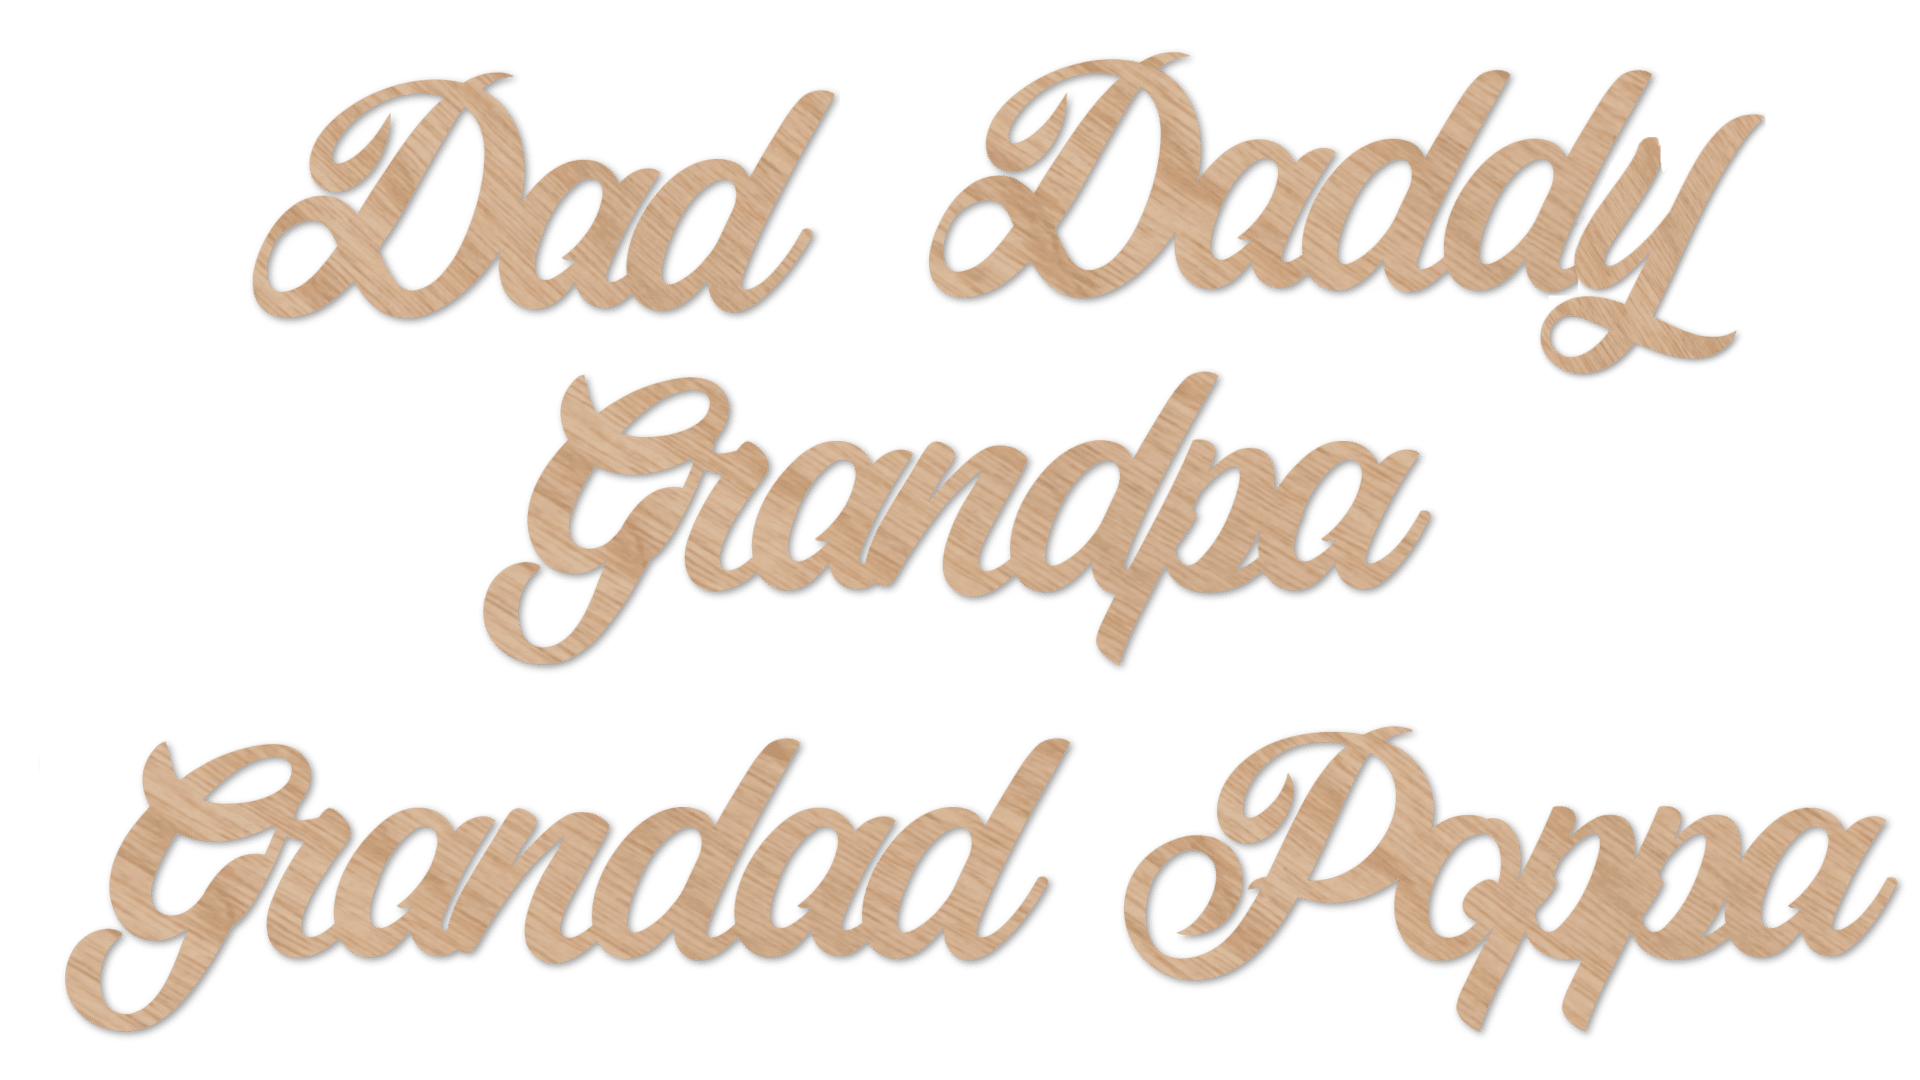 Dad, daddy, grandpa, grandad and poppa